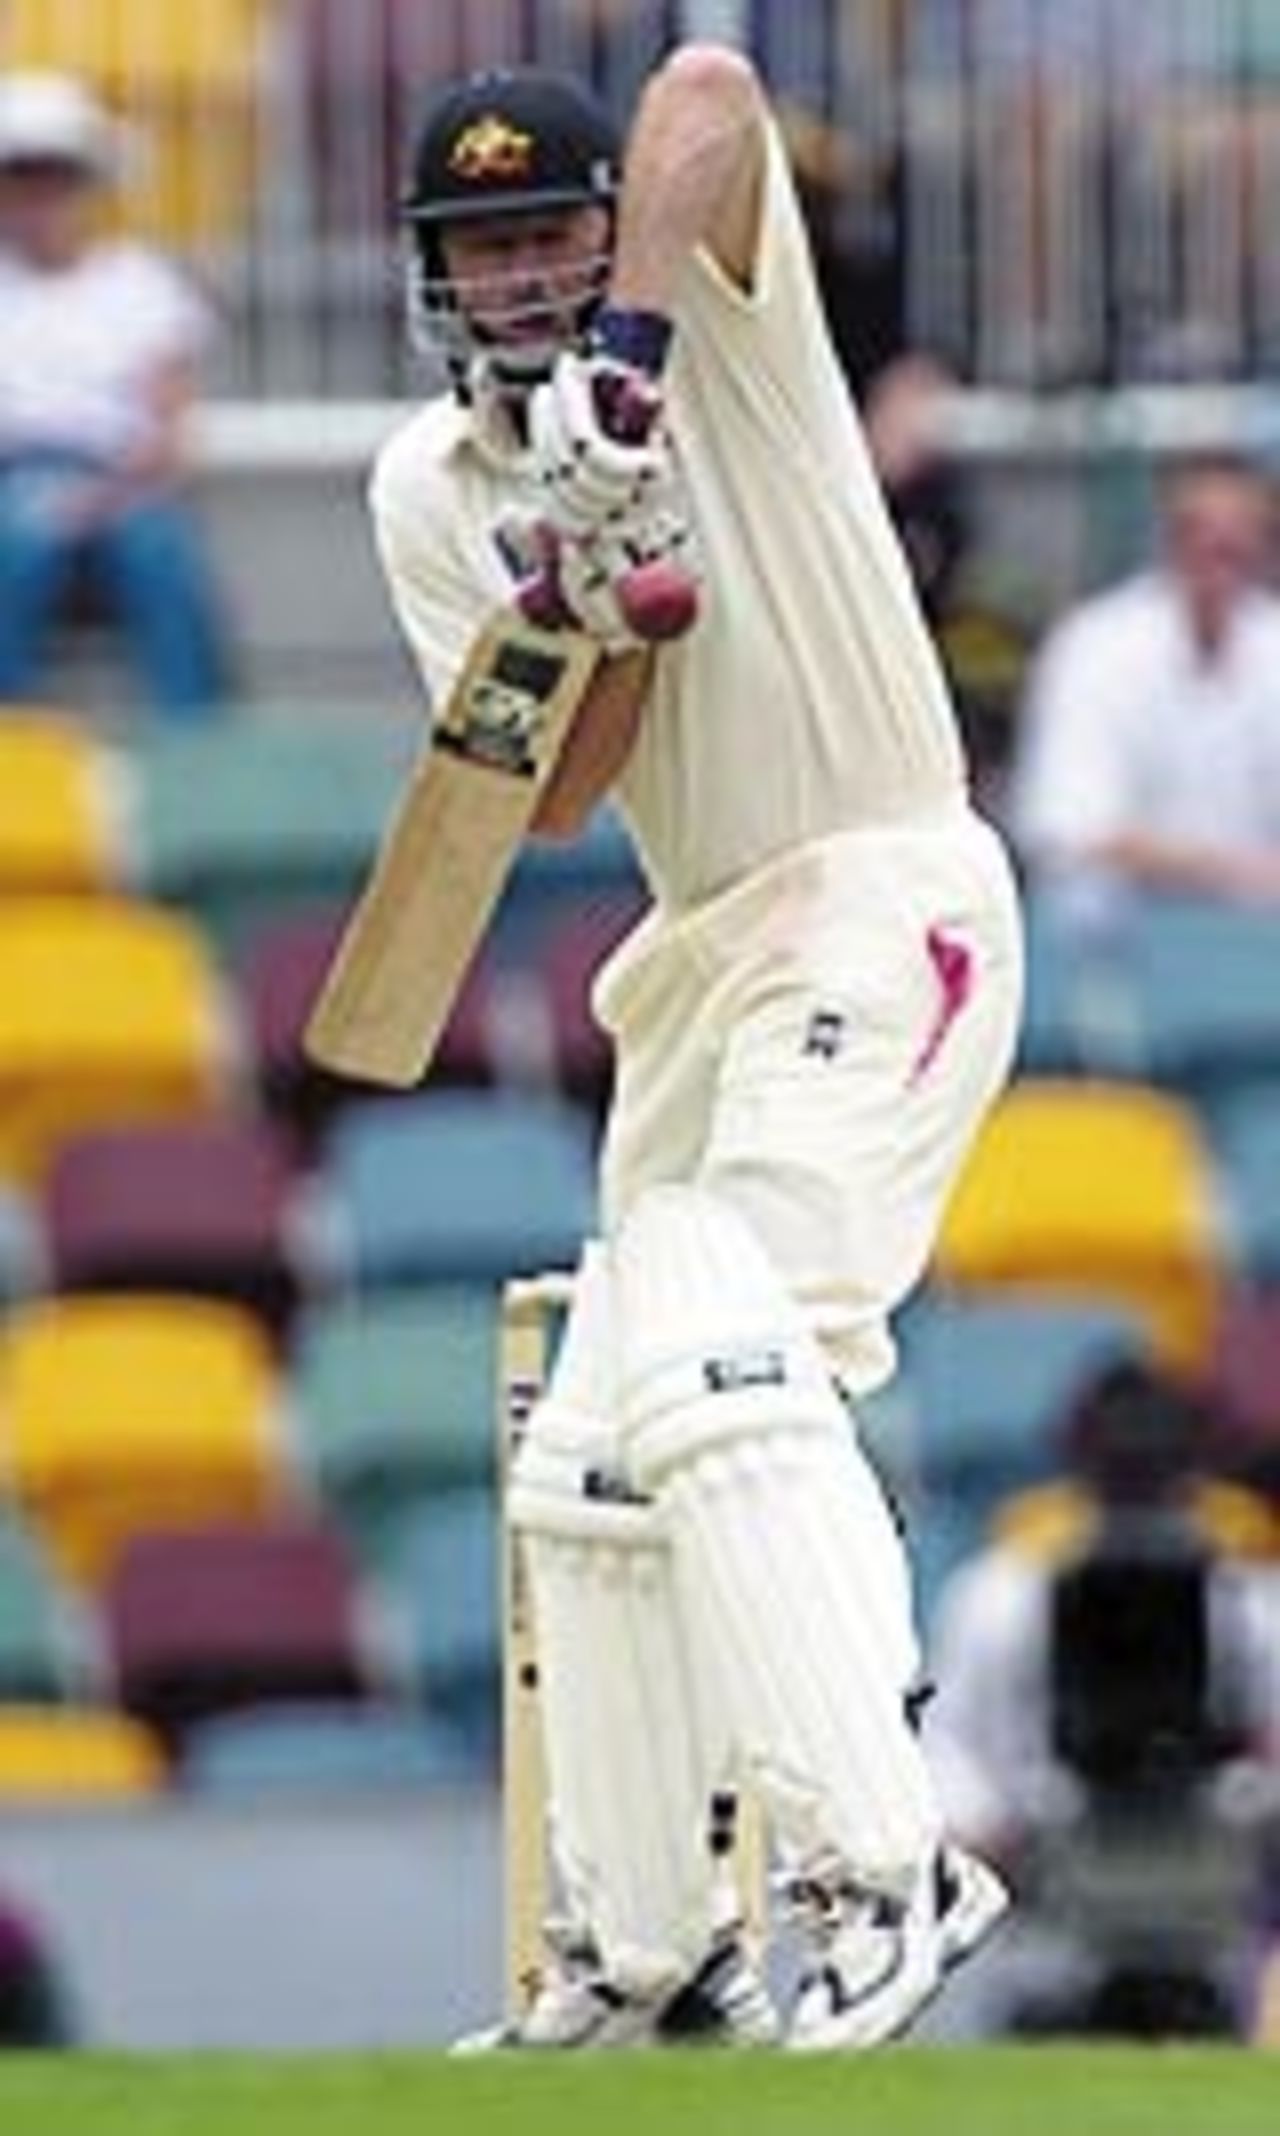 Steve Waugh of Australia defends a short ball, Australia v West Indies, 1st Test, Brisbane, 2nd day, 24th November, 2003